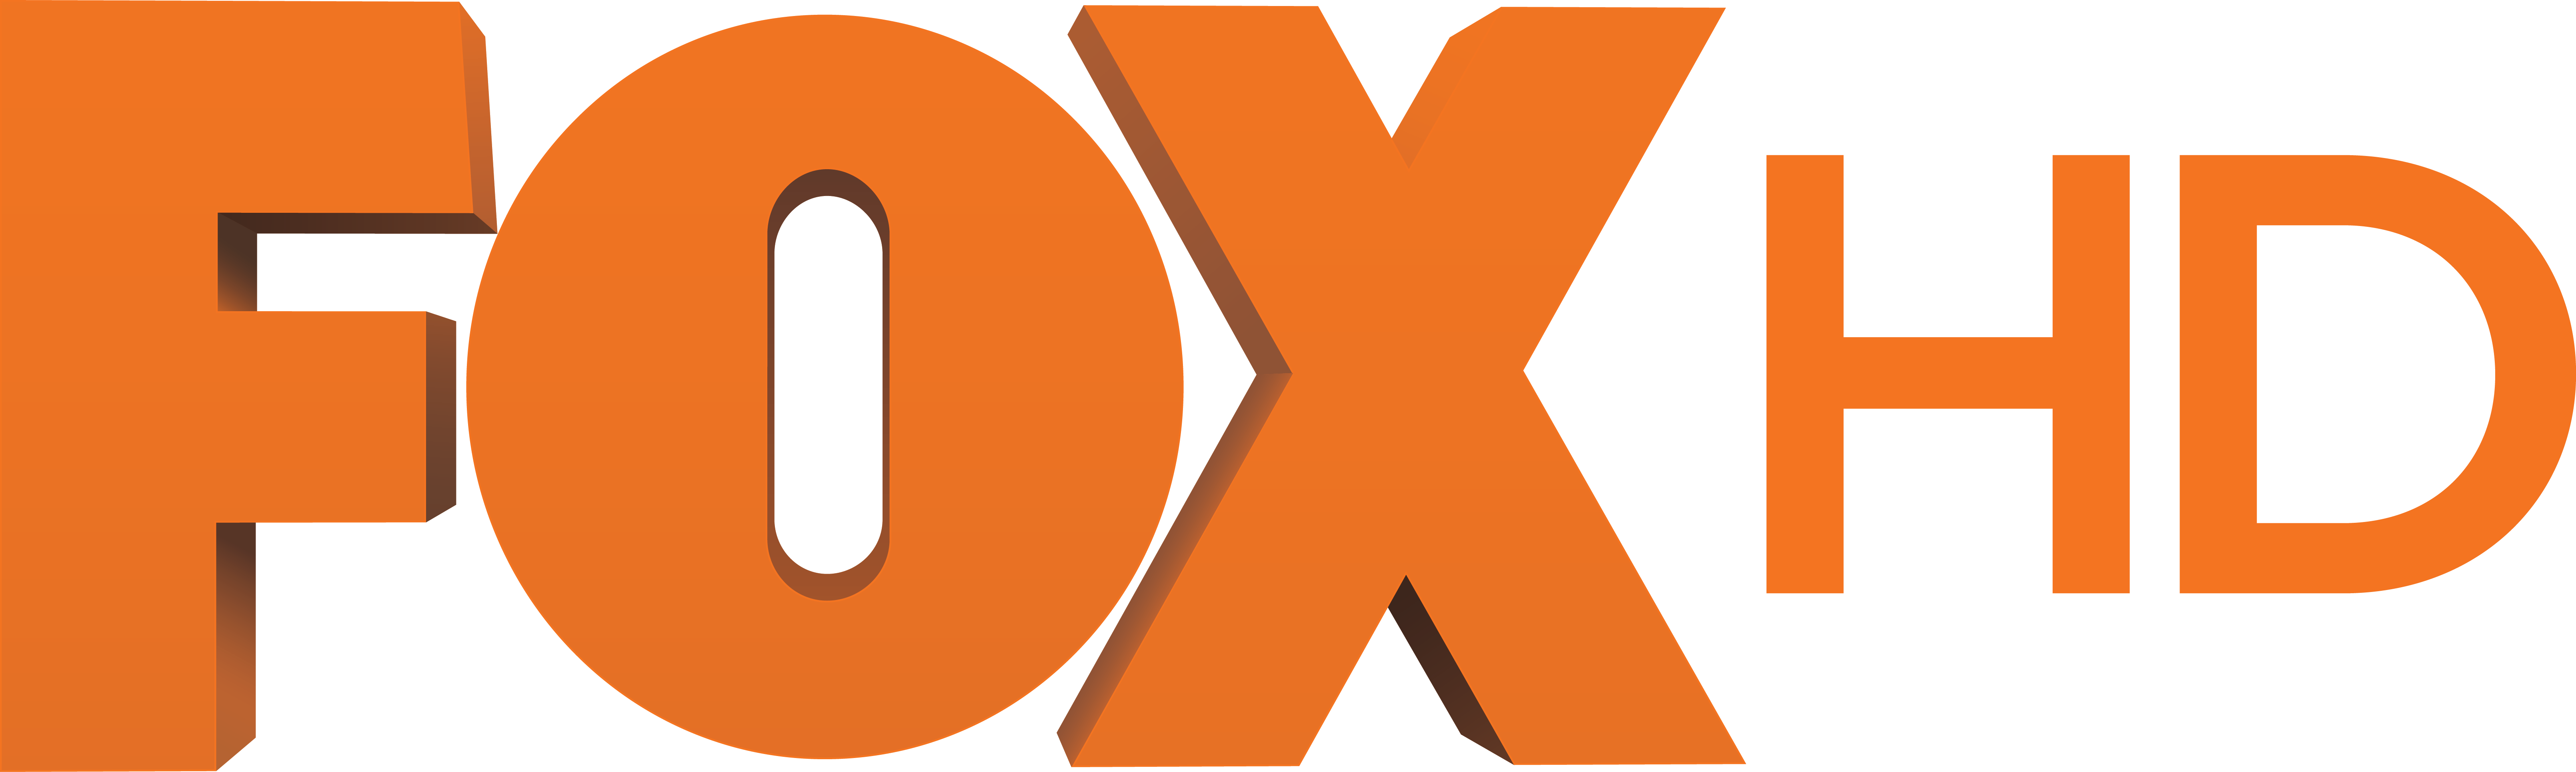 Foks tv canlı. Телеканал Fox. Лого телеканала Фокс.